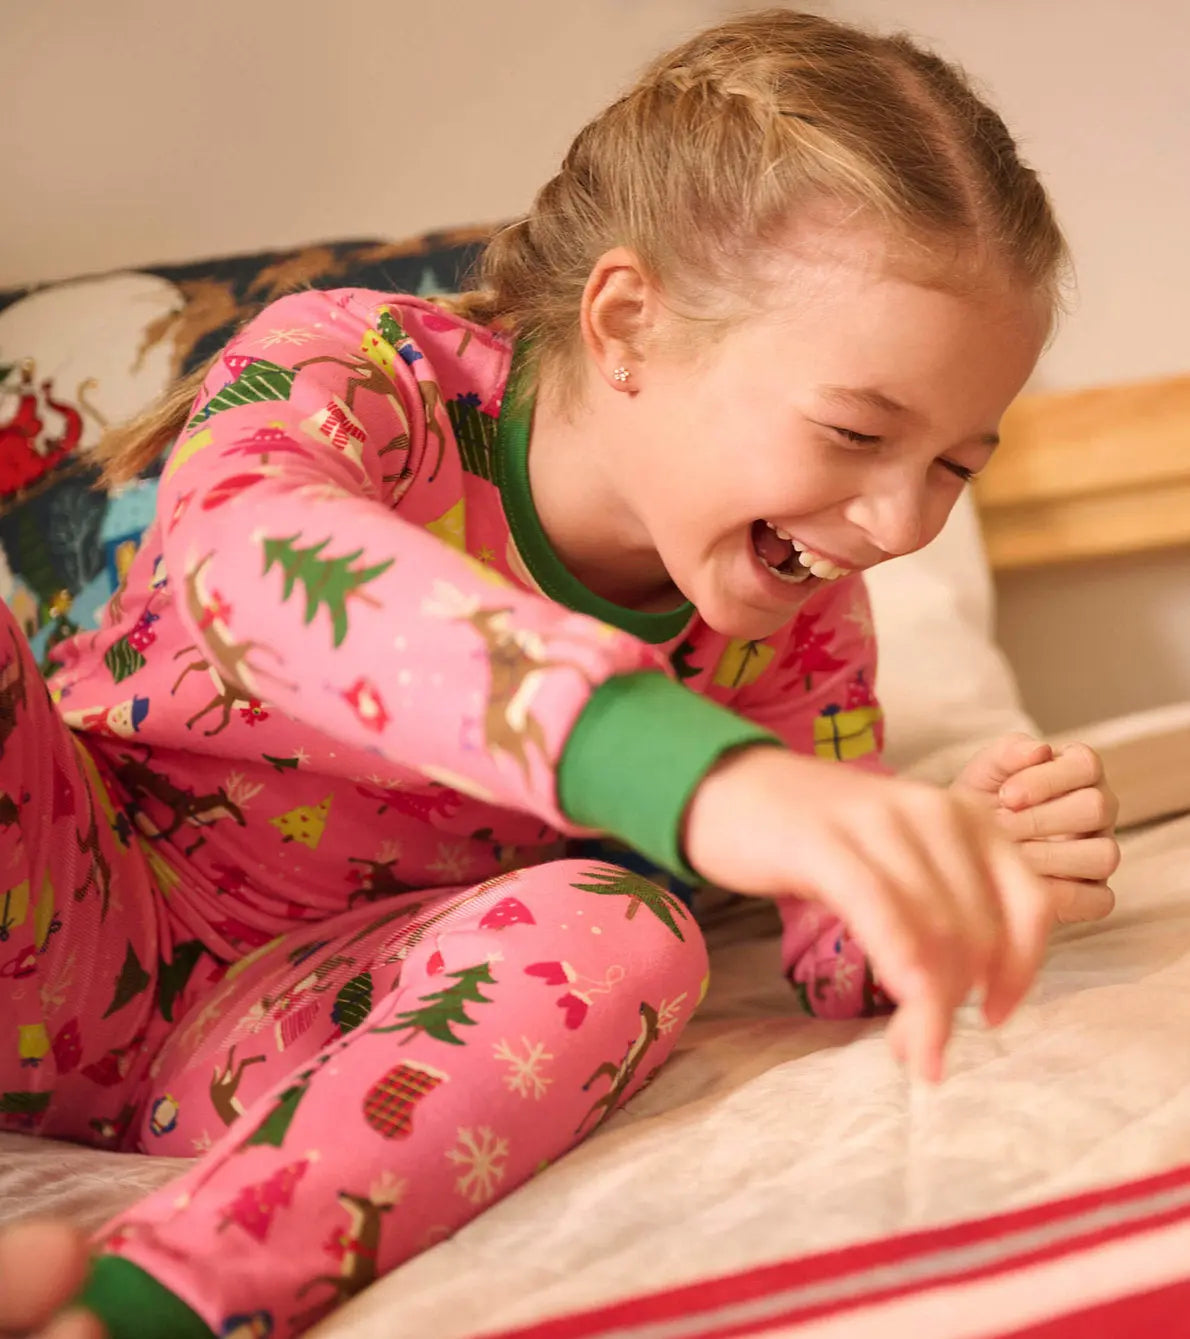 Pink Christmas Kids Organic Cotton Pajama Set | Hatley | Hatley | Jenni Kidz